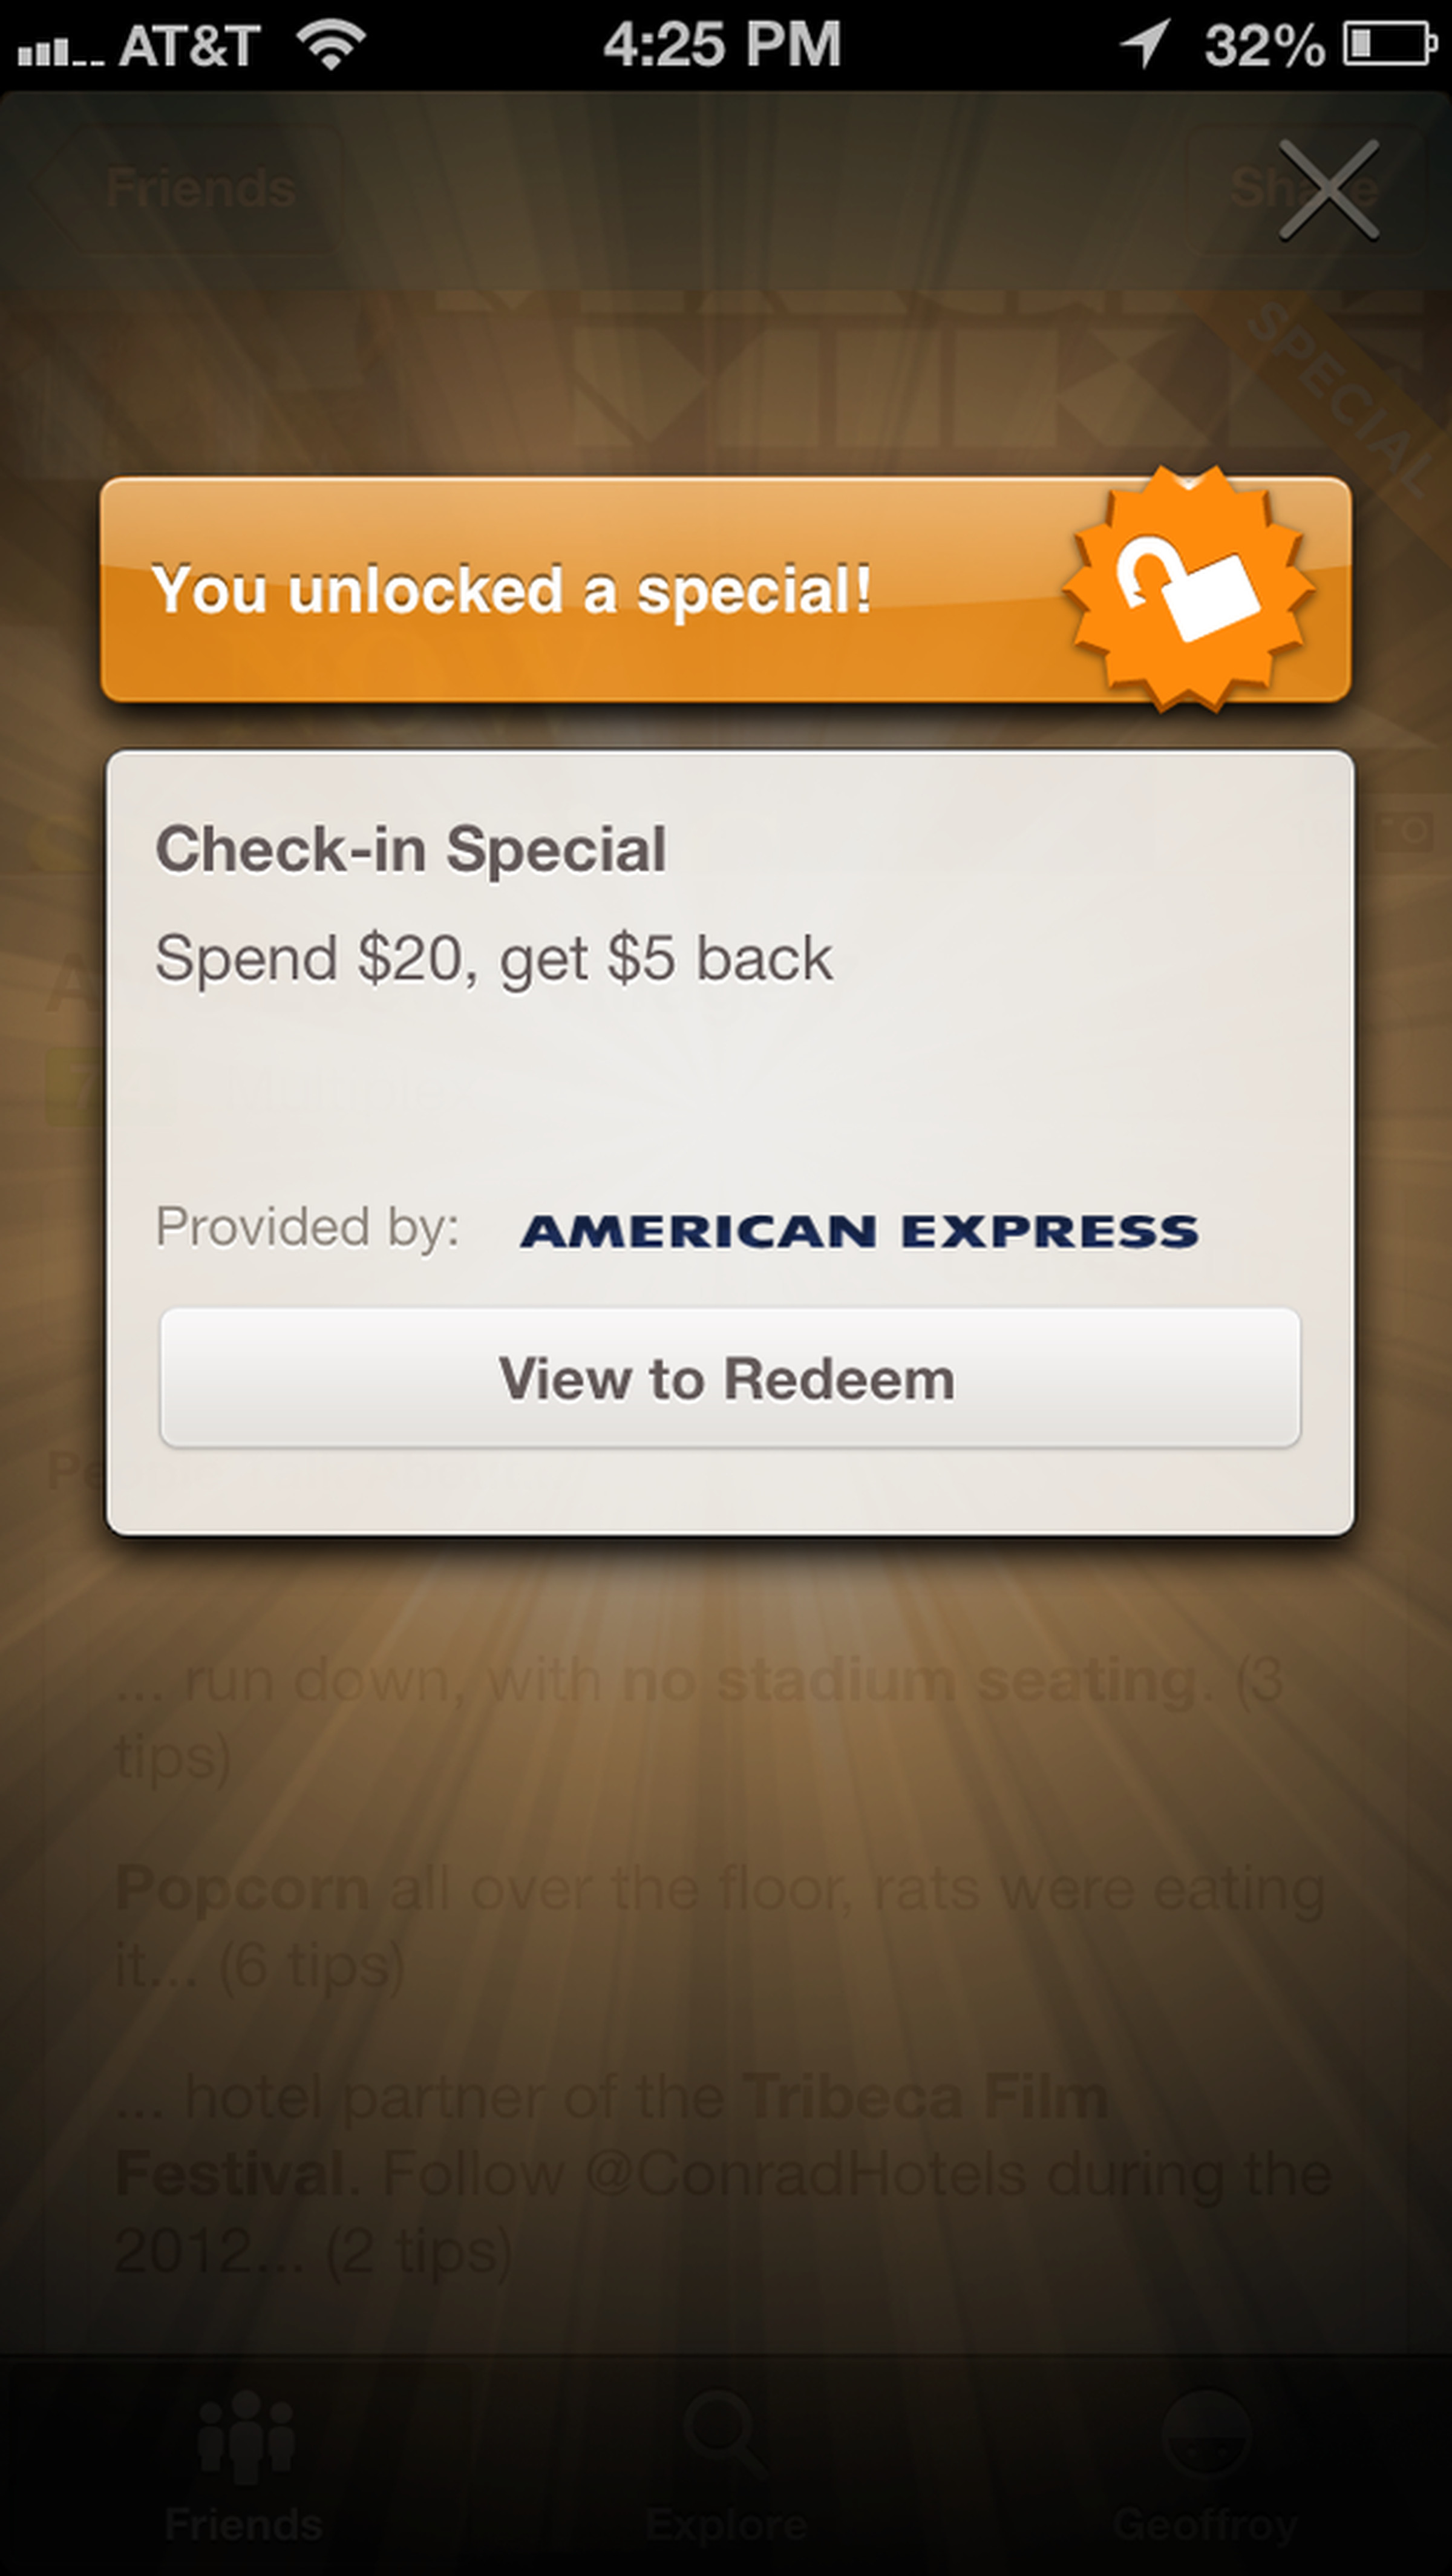 Foursquare Specials Visa and Mastercard screenshots